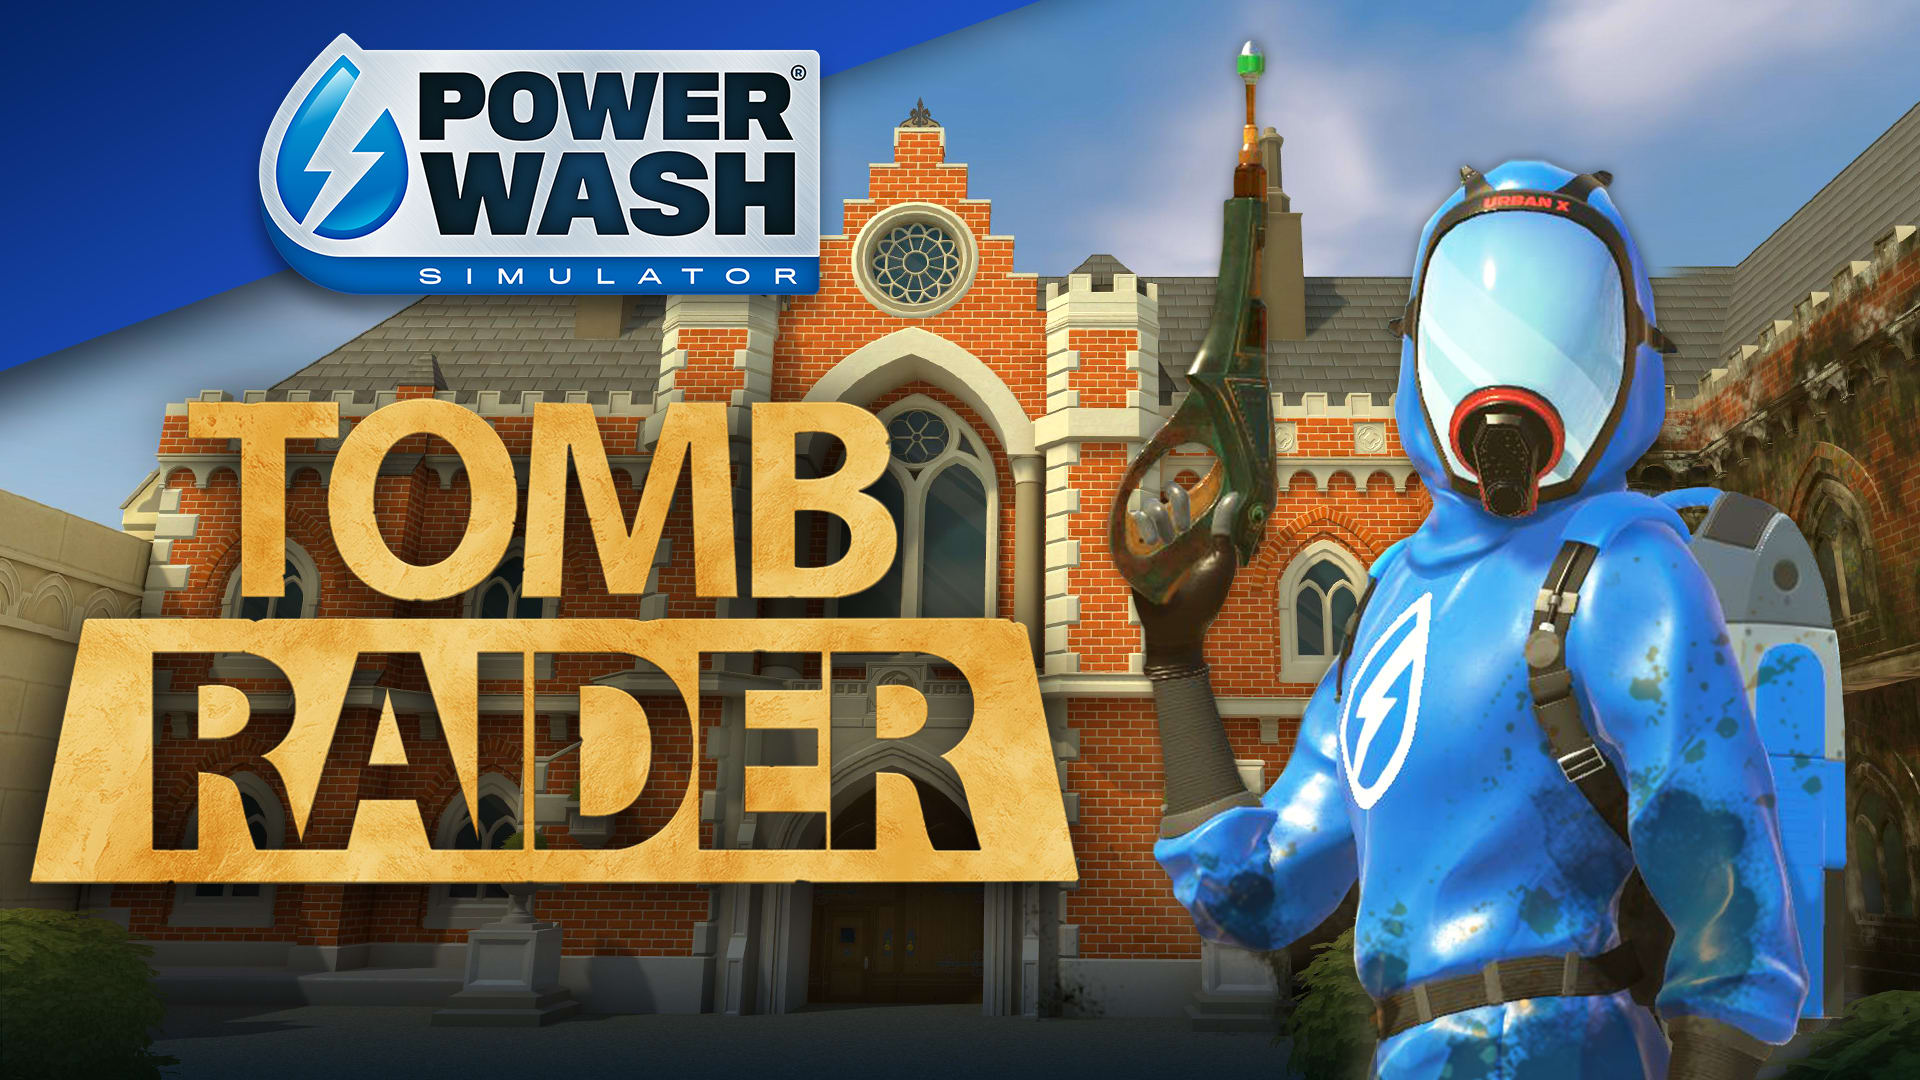 PowerWash Simulator Tomb Raider Expansion Pack